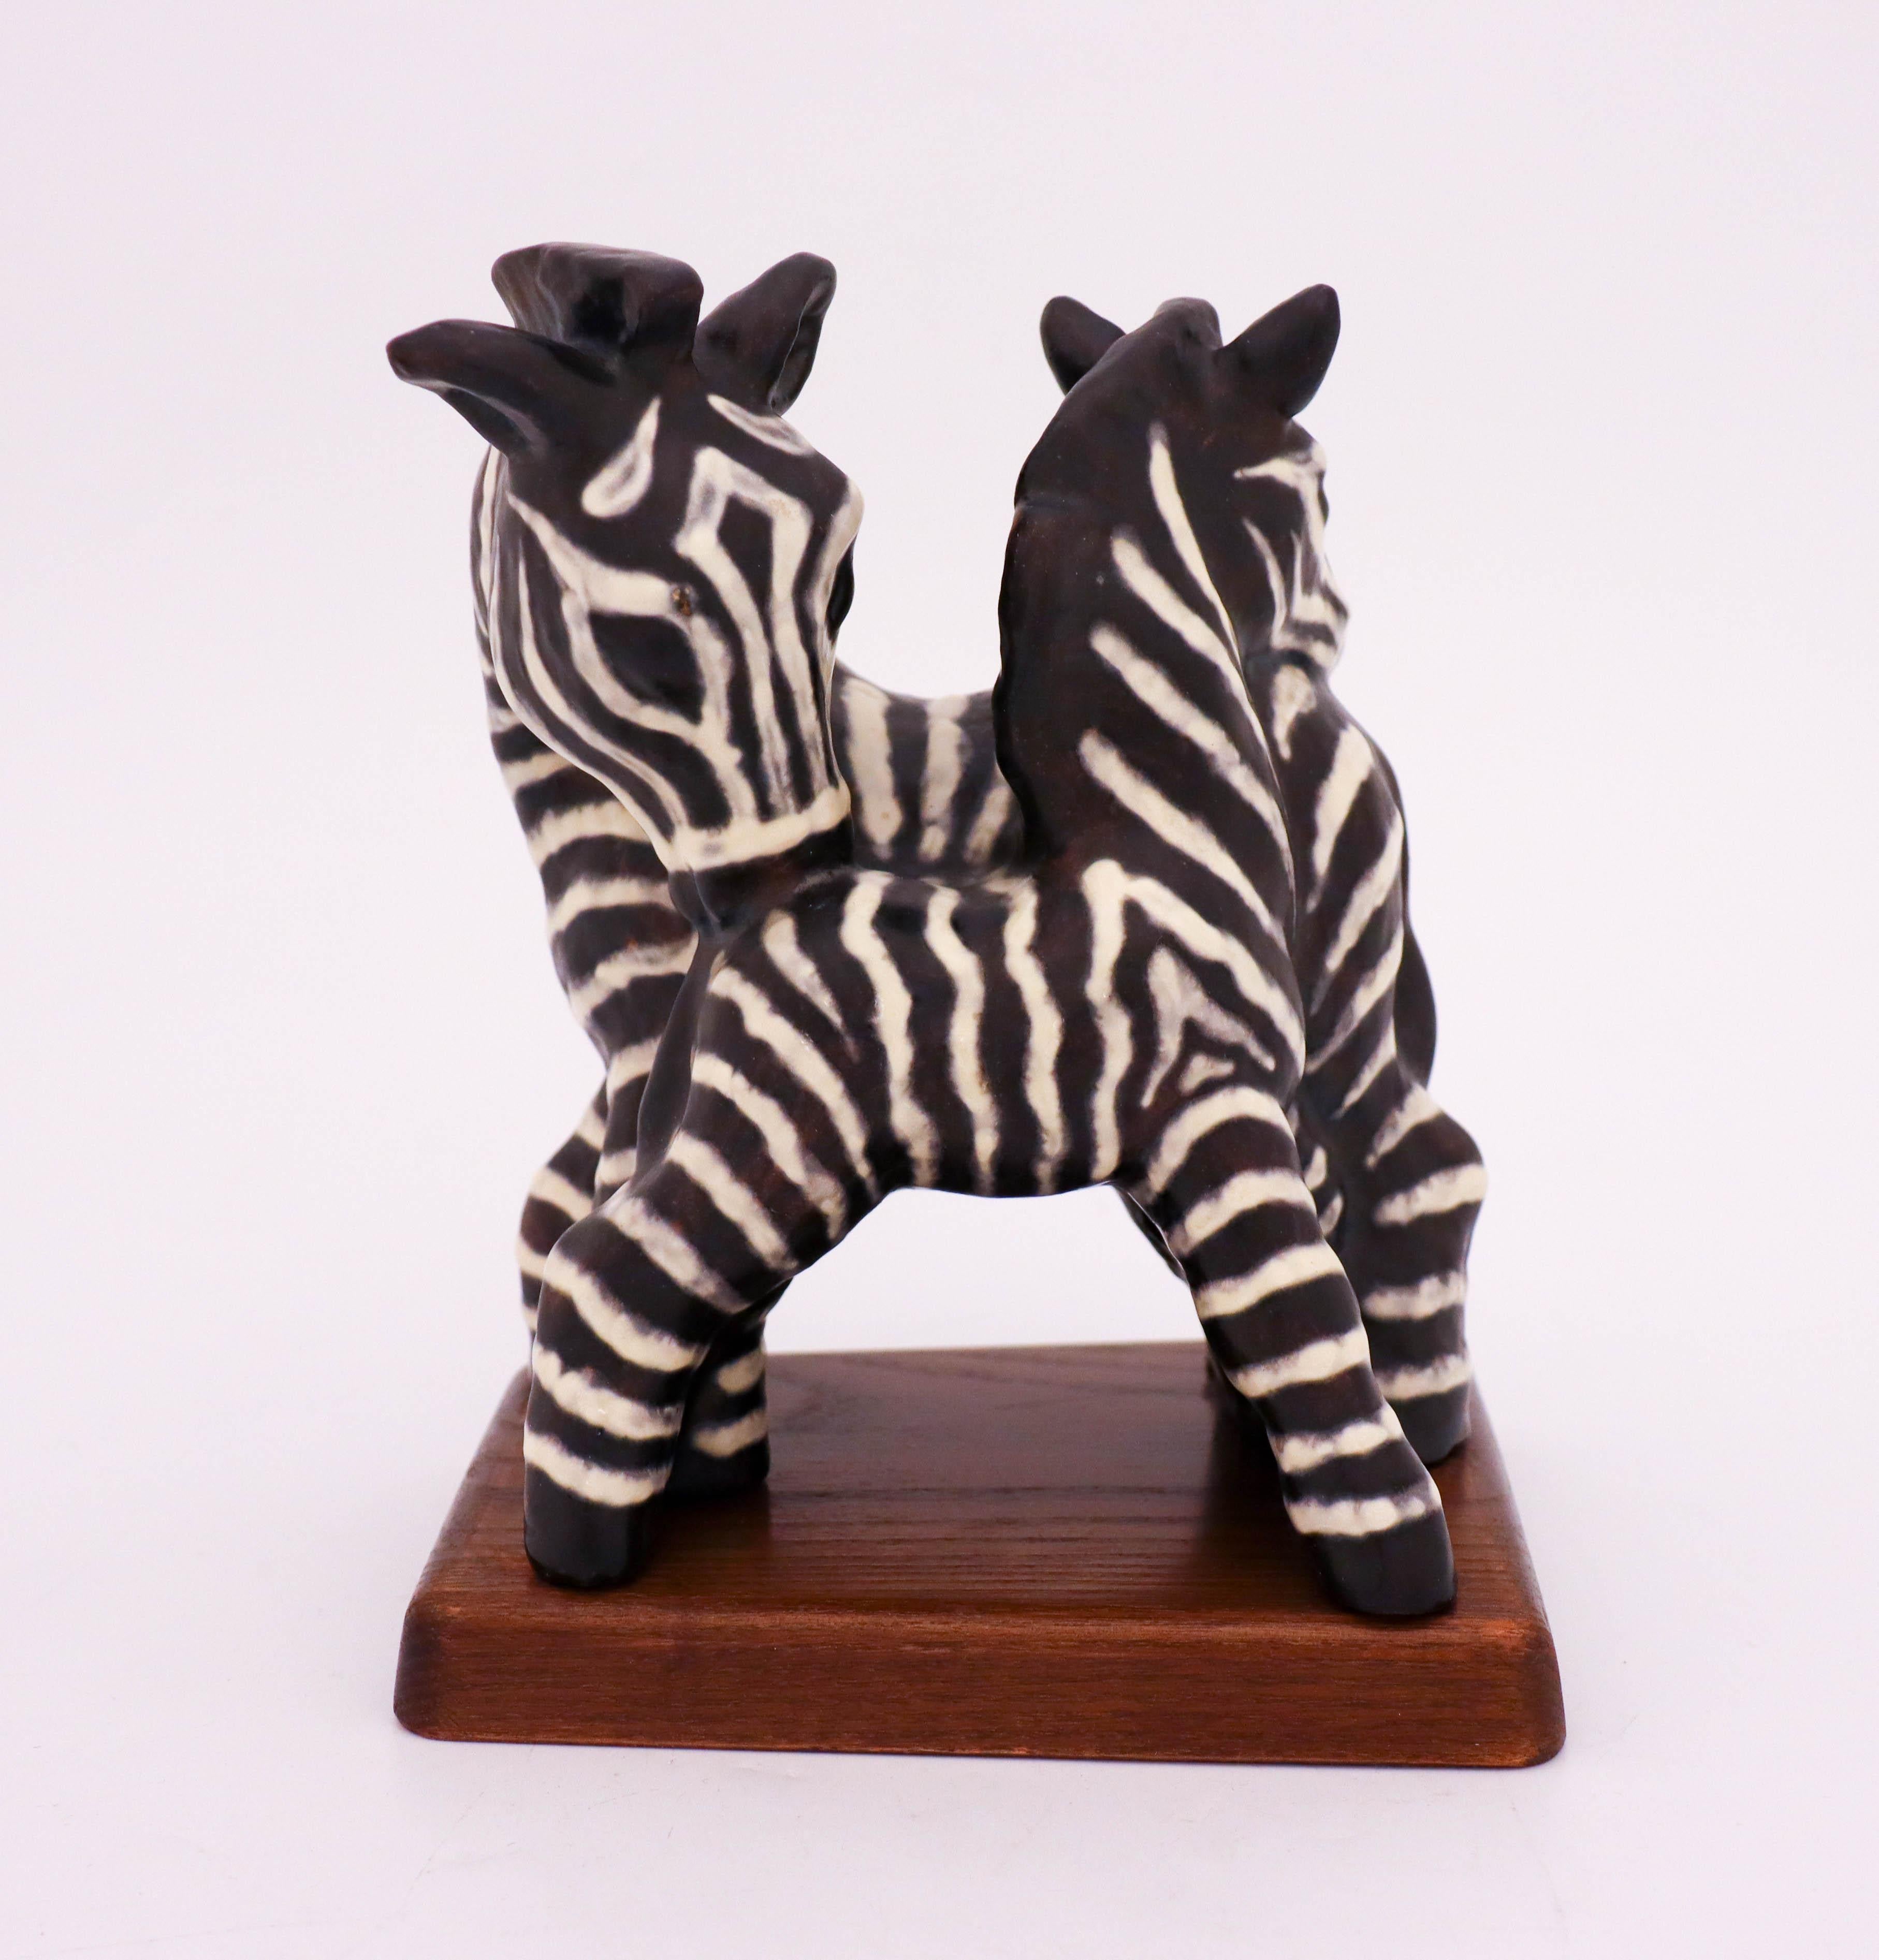 Ceramic sculpture ‘Zebras’ designed by Vicke Lindstrand for Upsala-Ekeby in the 1950s.